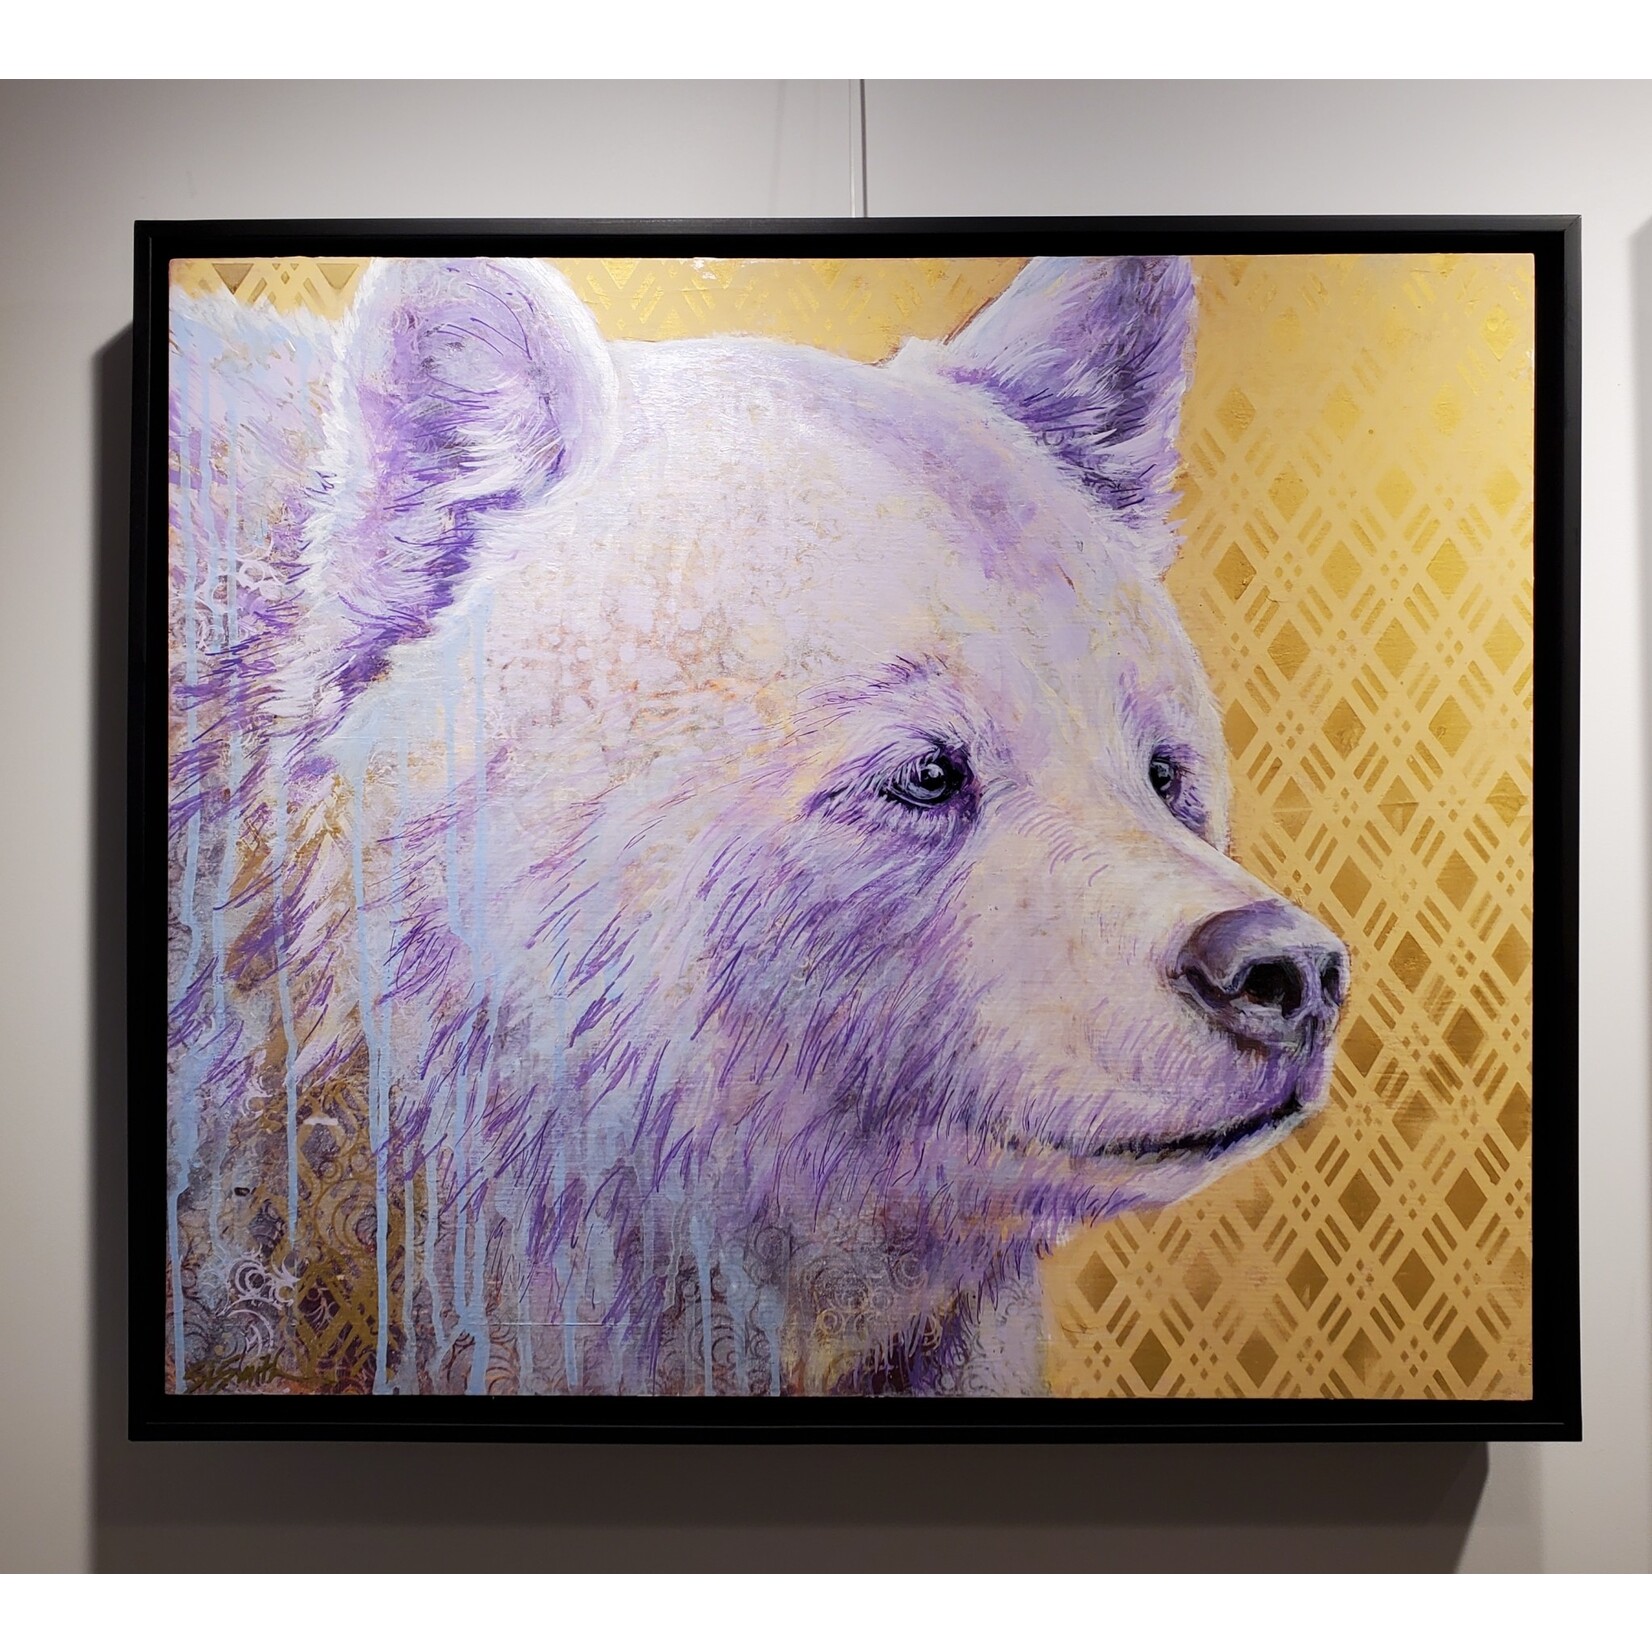 Sara L Smith "Wilding - Snowflake Spirit Bear" - mixed acrylics on birch panel